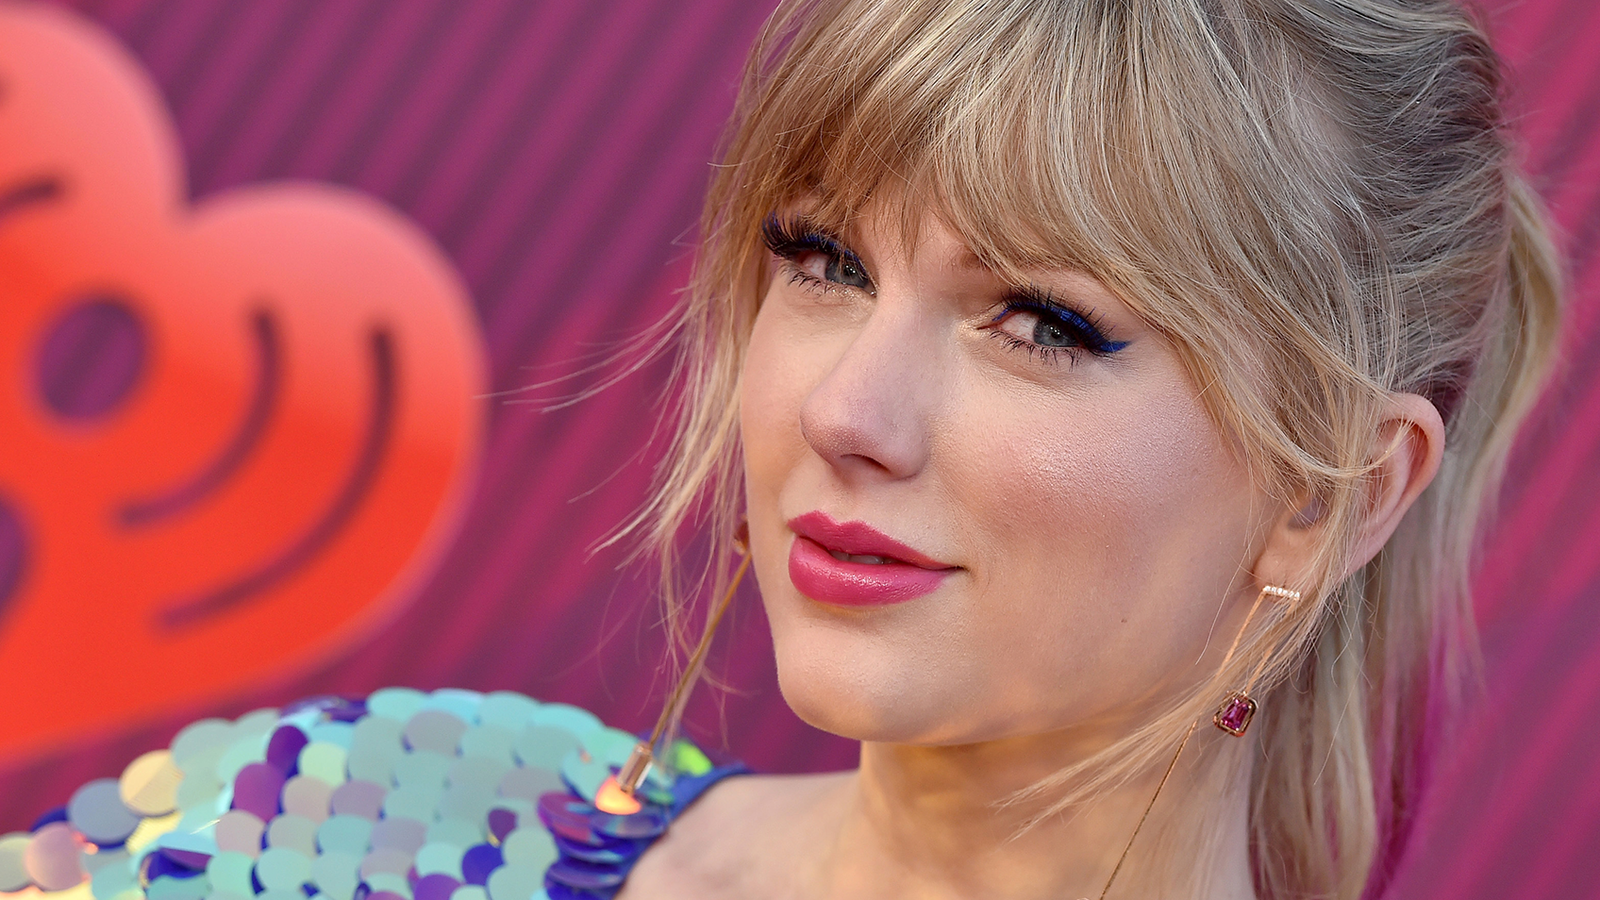 Taylor Swift Ranked #1 in Surprise Release of 8th studio album 'Folkler'